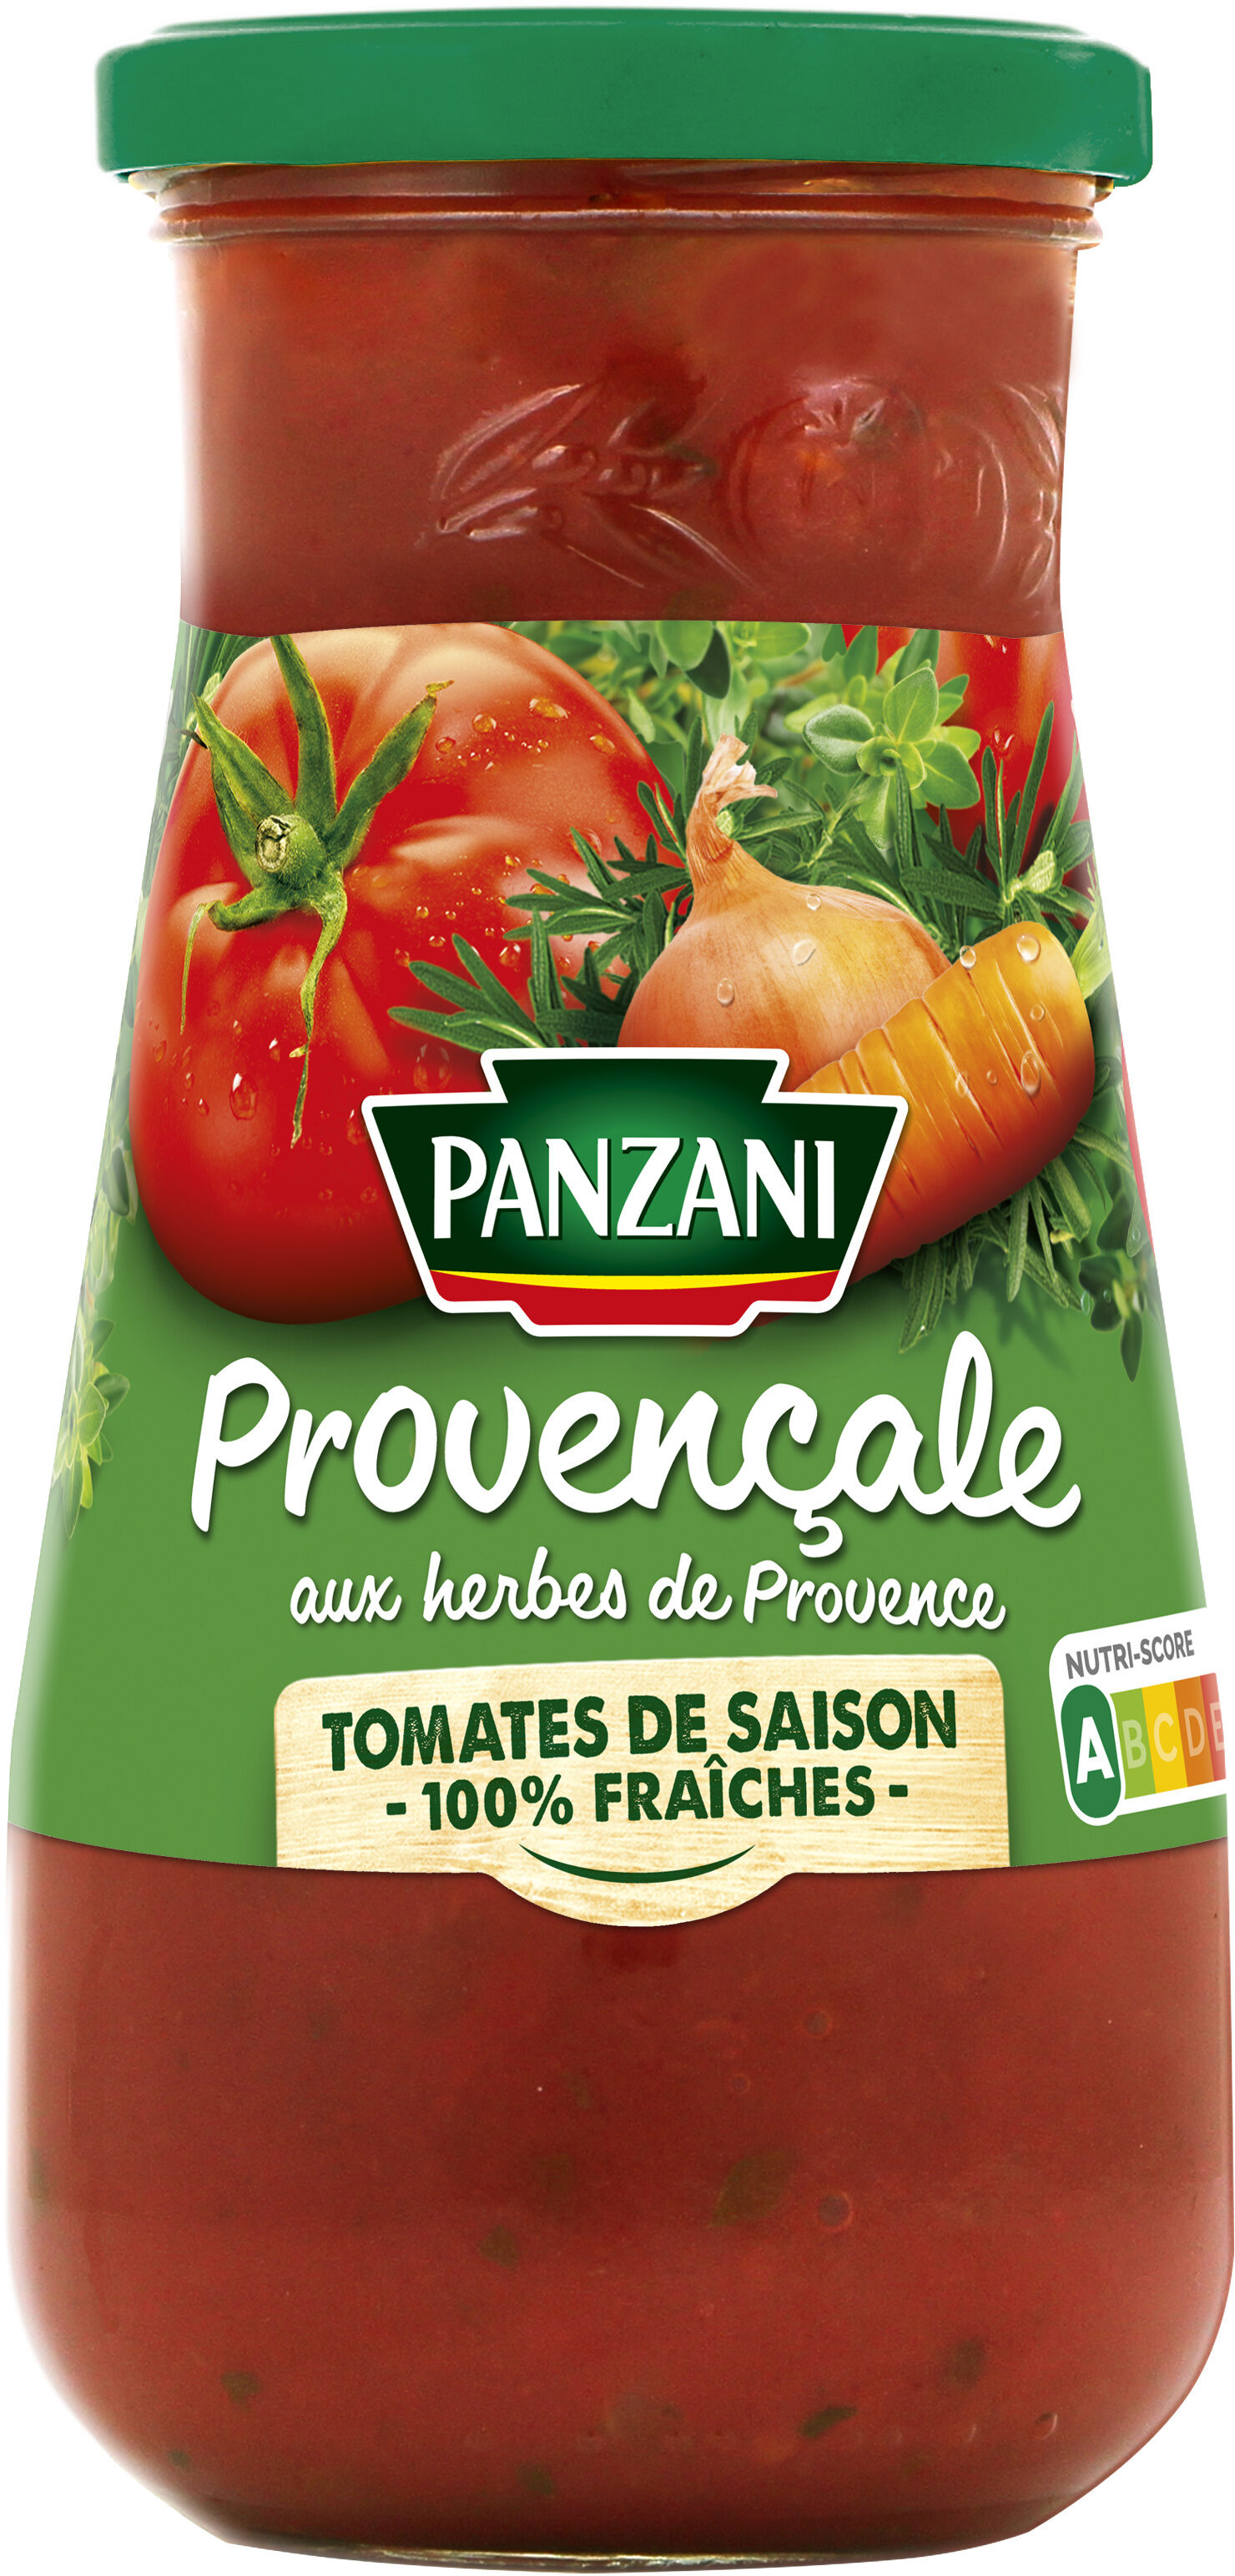 Panzani - spf - sauce provençale - Product - fr